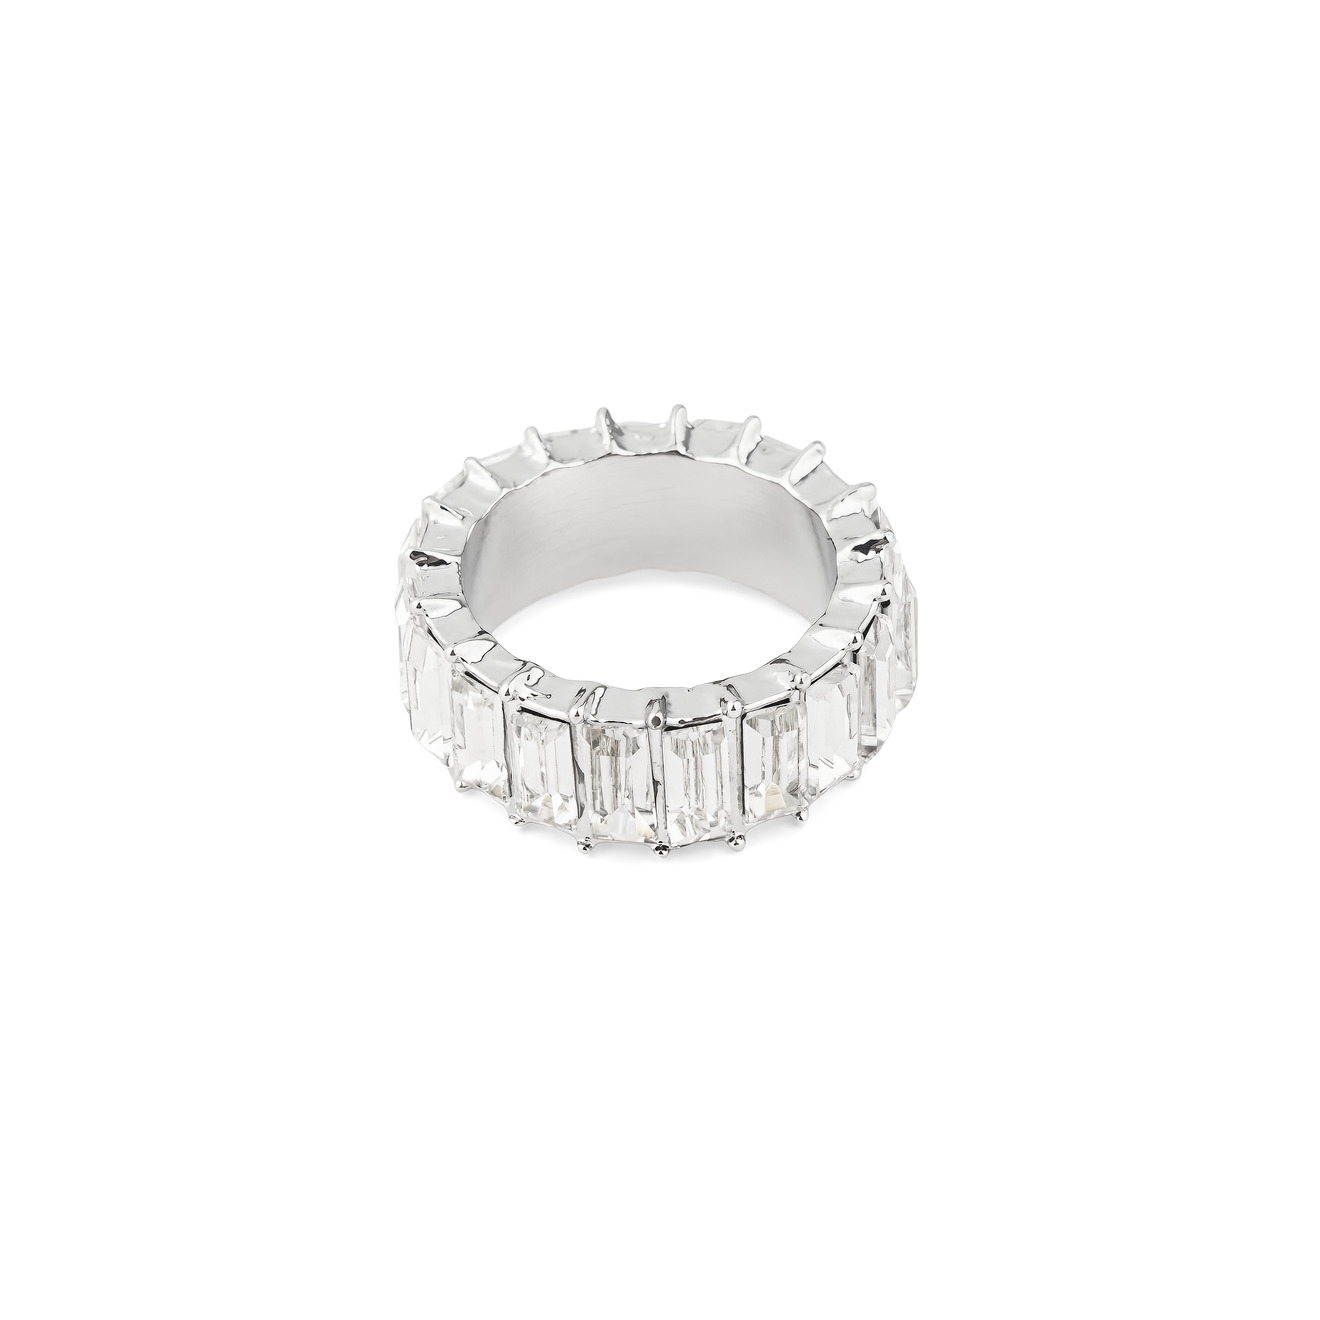 Herald Percy Серебристое кольцо с белыми кристаллами herald percy серебристое колье с белыми кристаллами